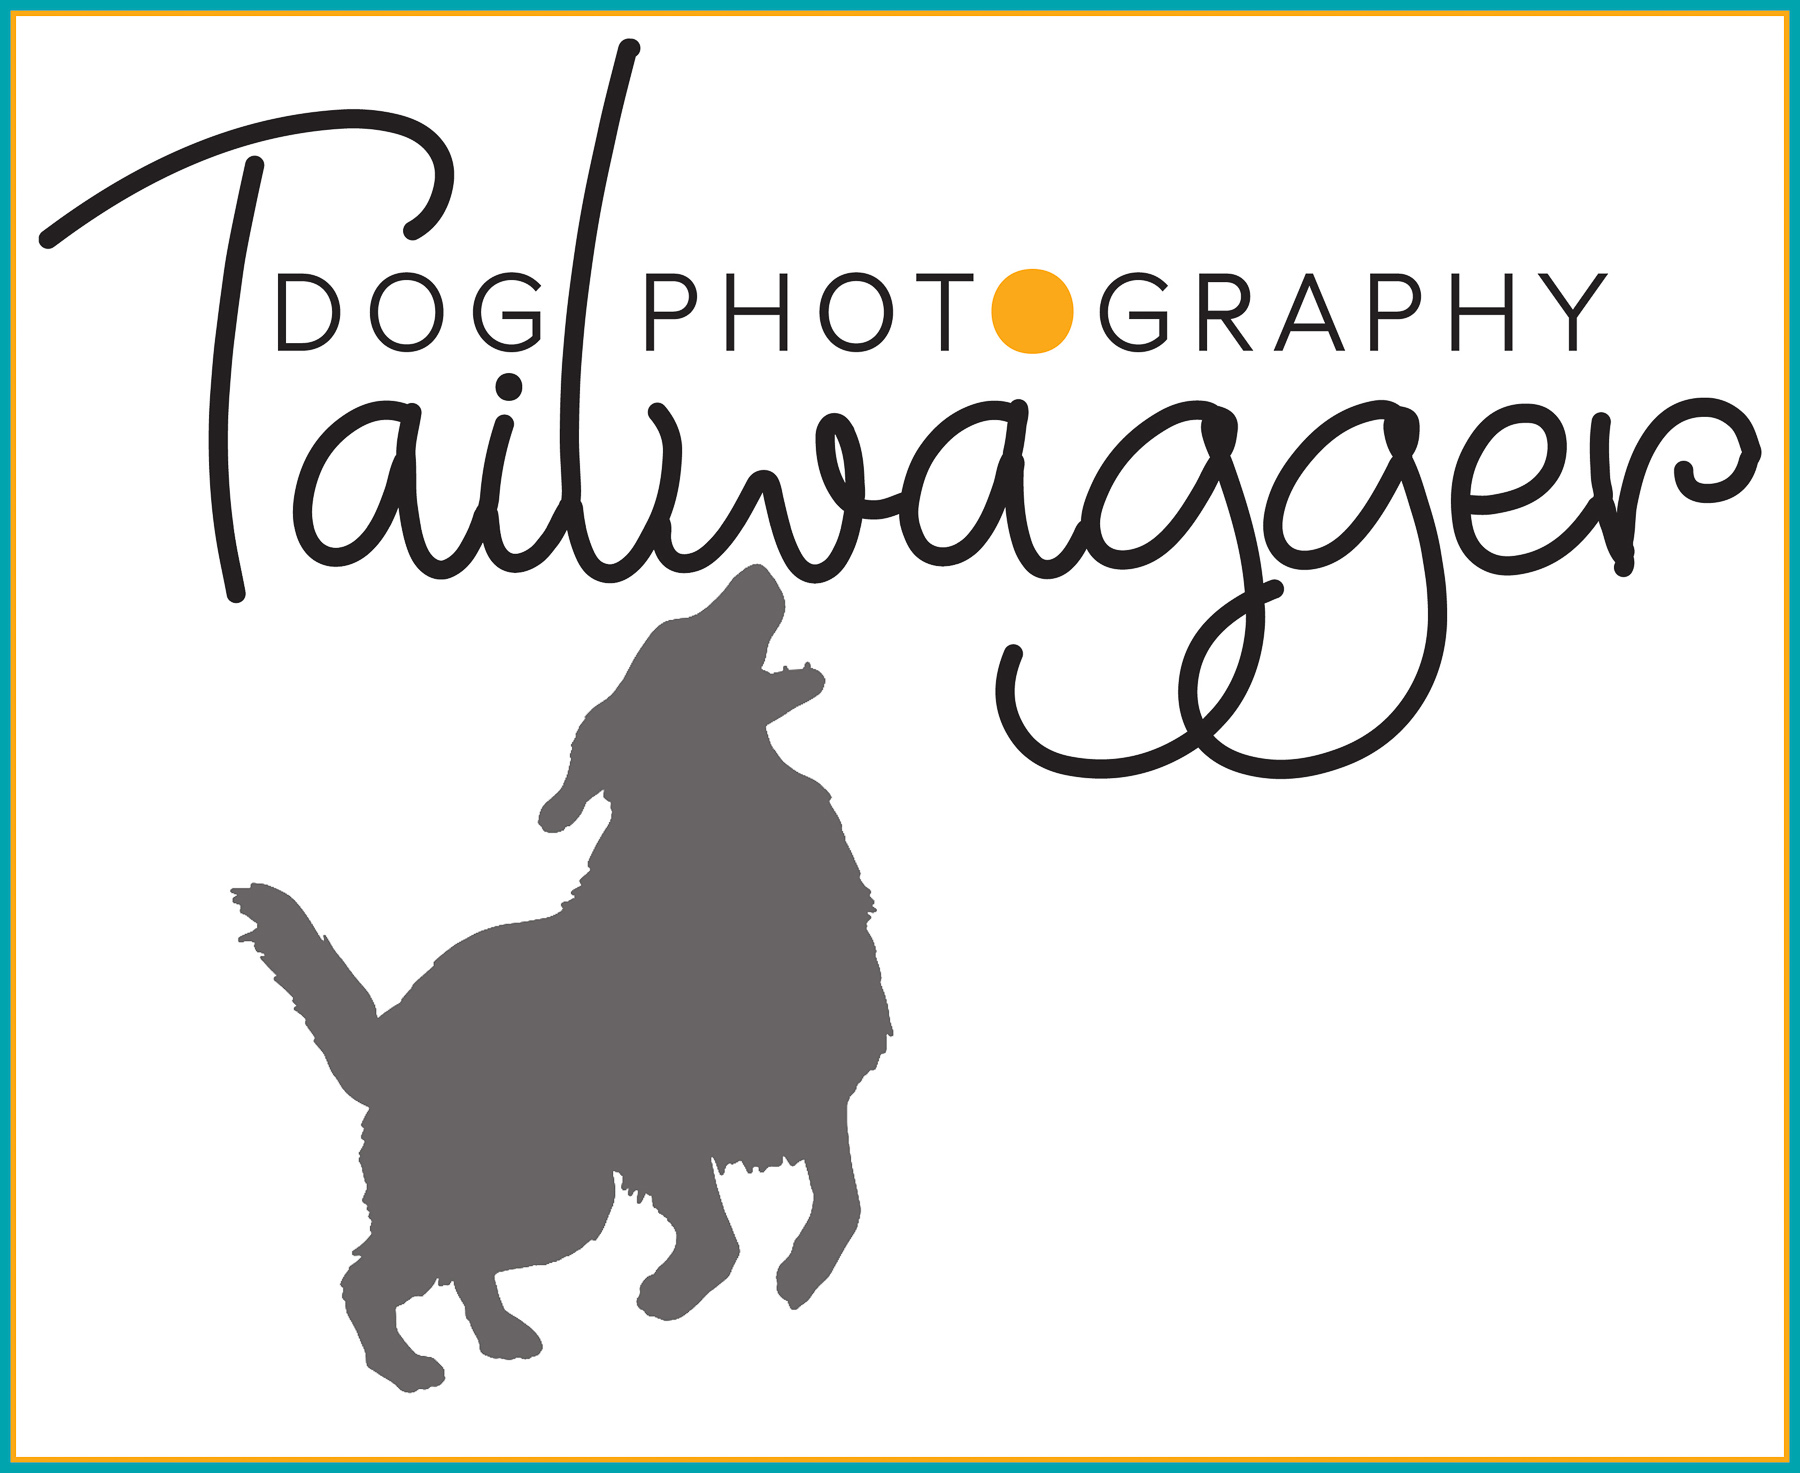 Logo of Grand Rapids dog photographer, Tailwagger Dog Photography.